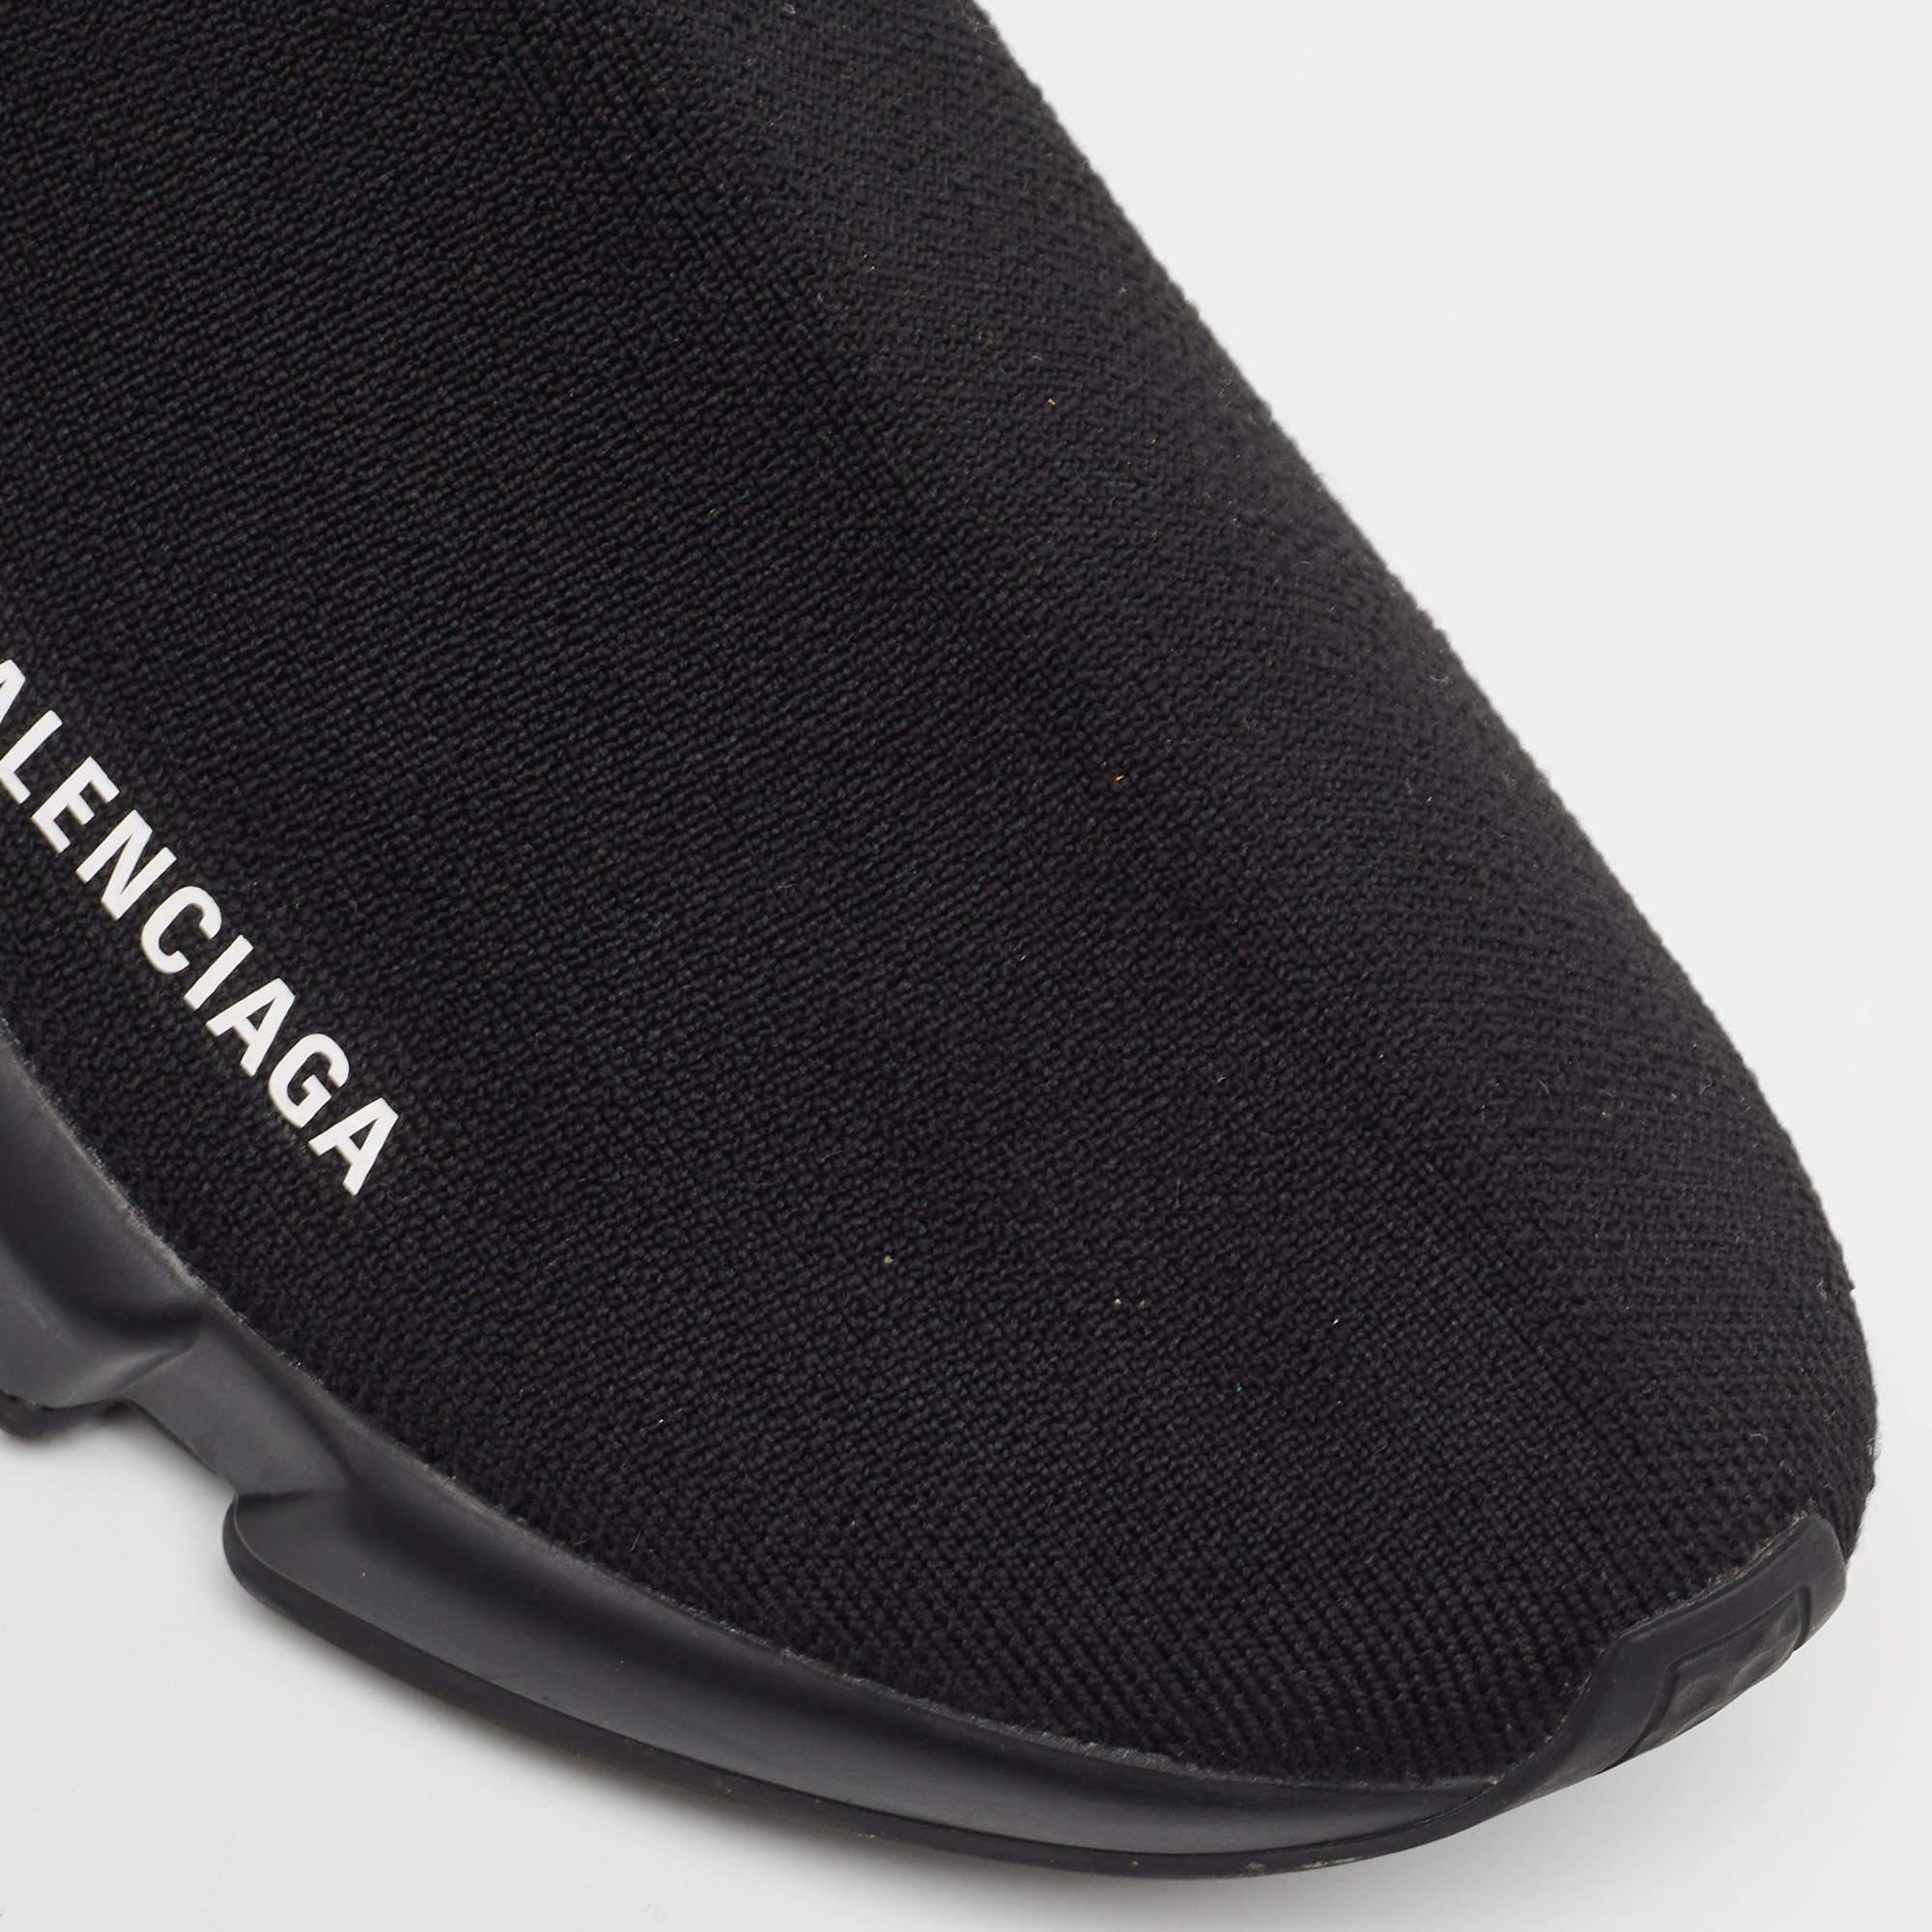 Balenciaga Black Knit Fabric Speed Trainer Sneakers Size 41 In Excellent Condition For Sale In Dubai, Al Qouz 2